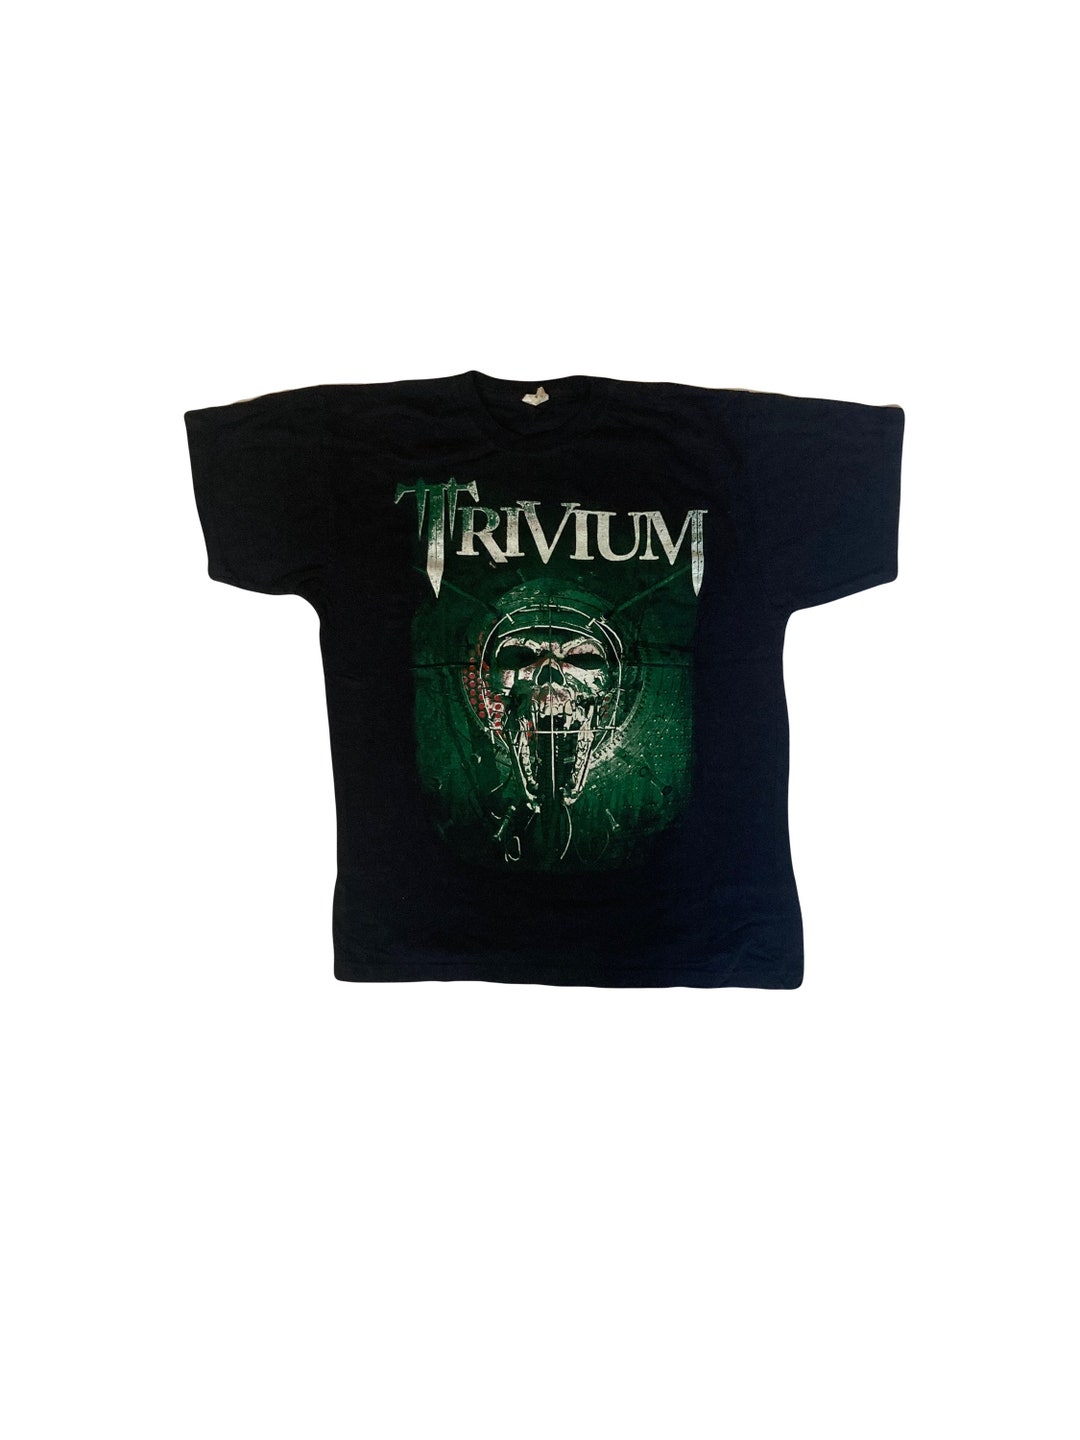 Rare 2012 Trivium european tour band t shirt size medium Etsy 日本